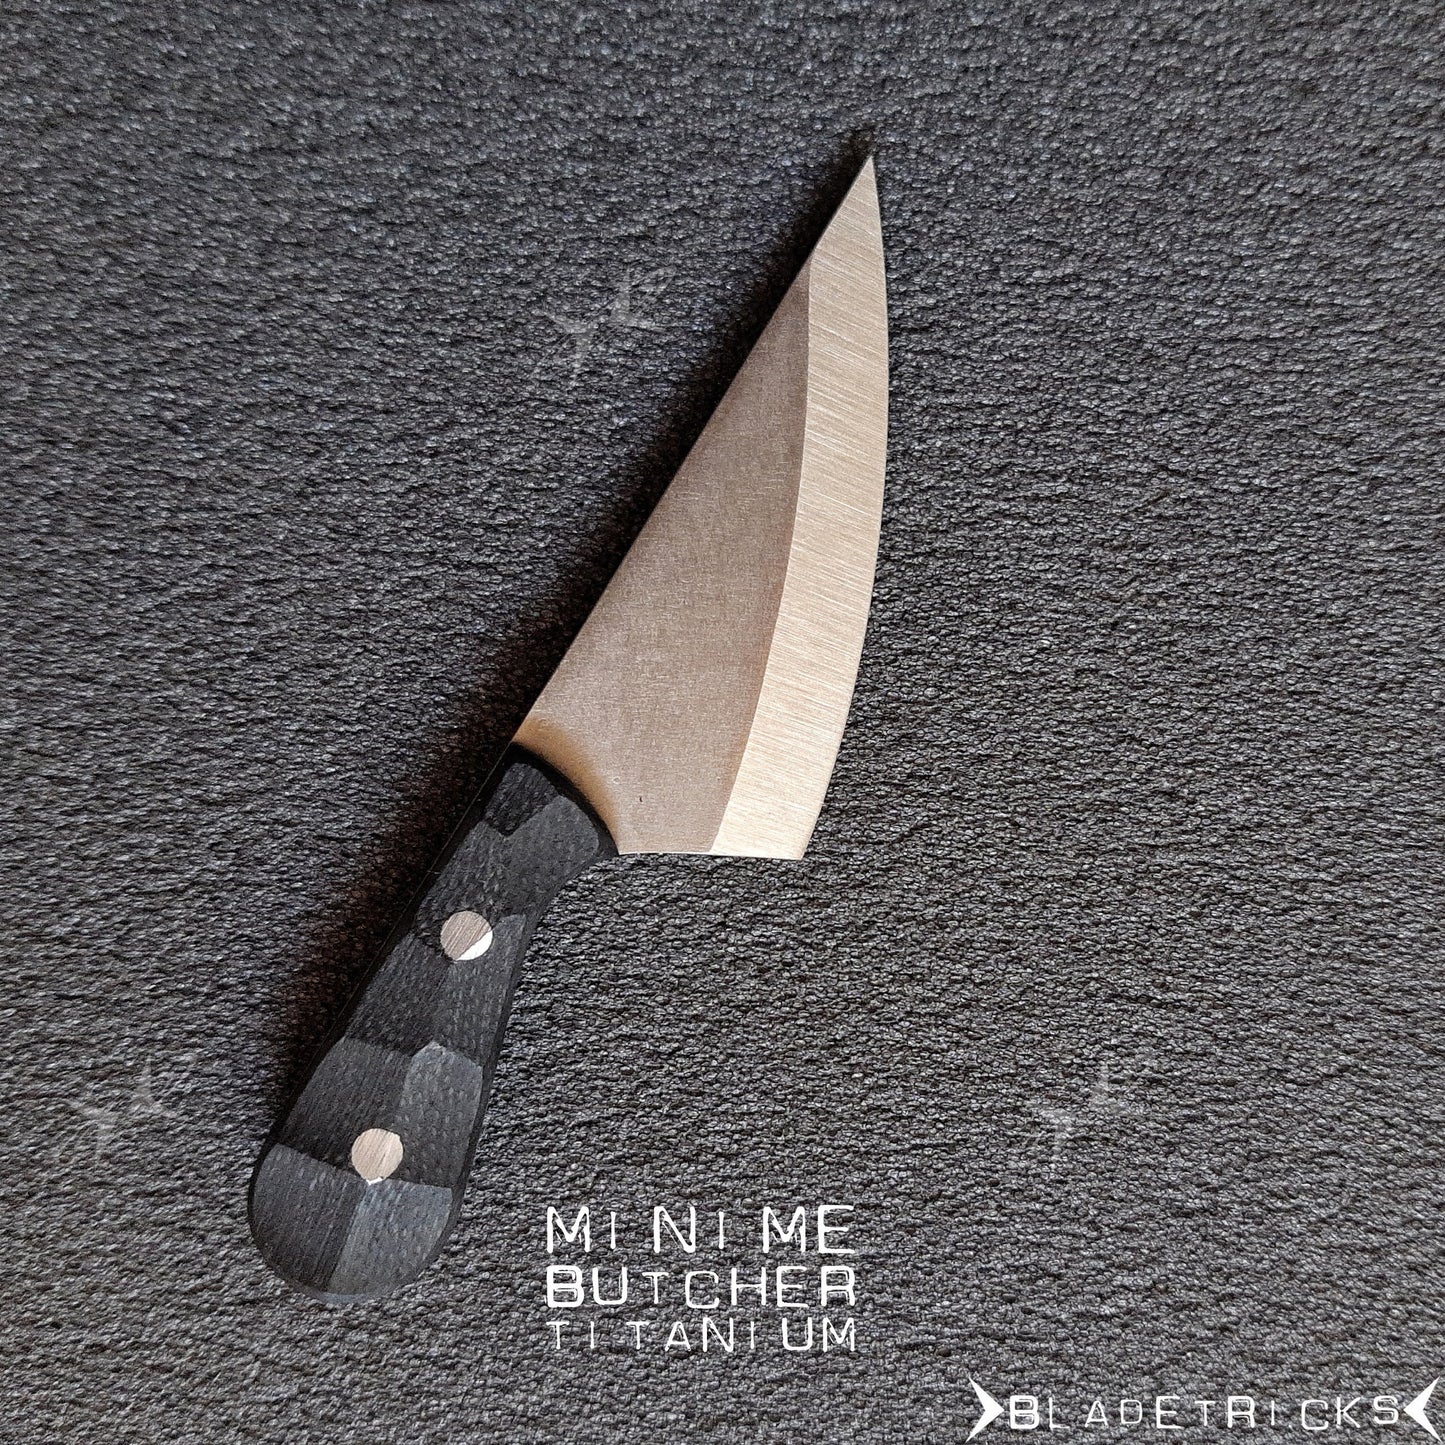 BLADETRICKS CUSTOM MINIME BUTCHER KNIFE, TITANIUM & BLACK G10